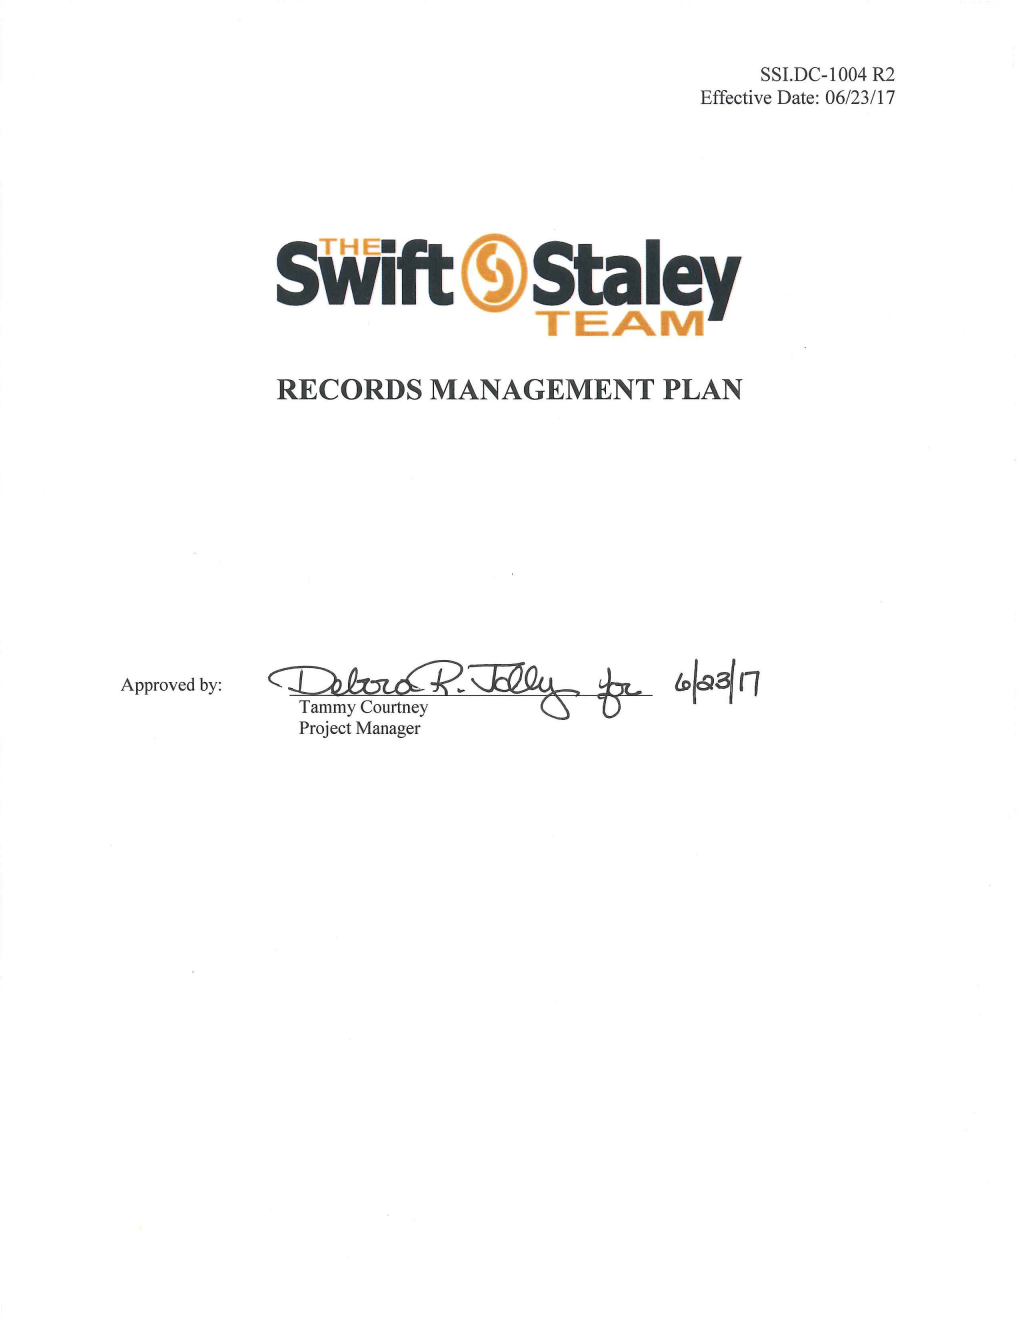 Records Management Plan